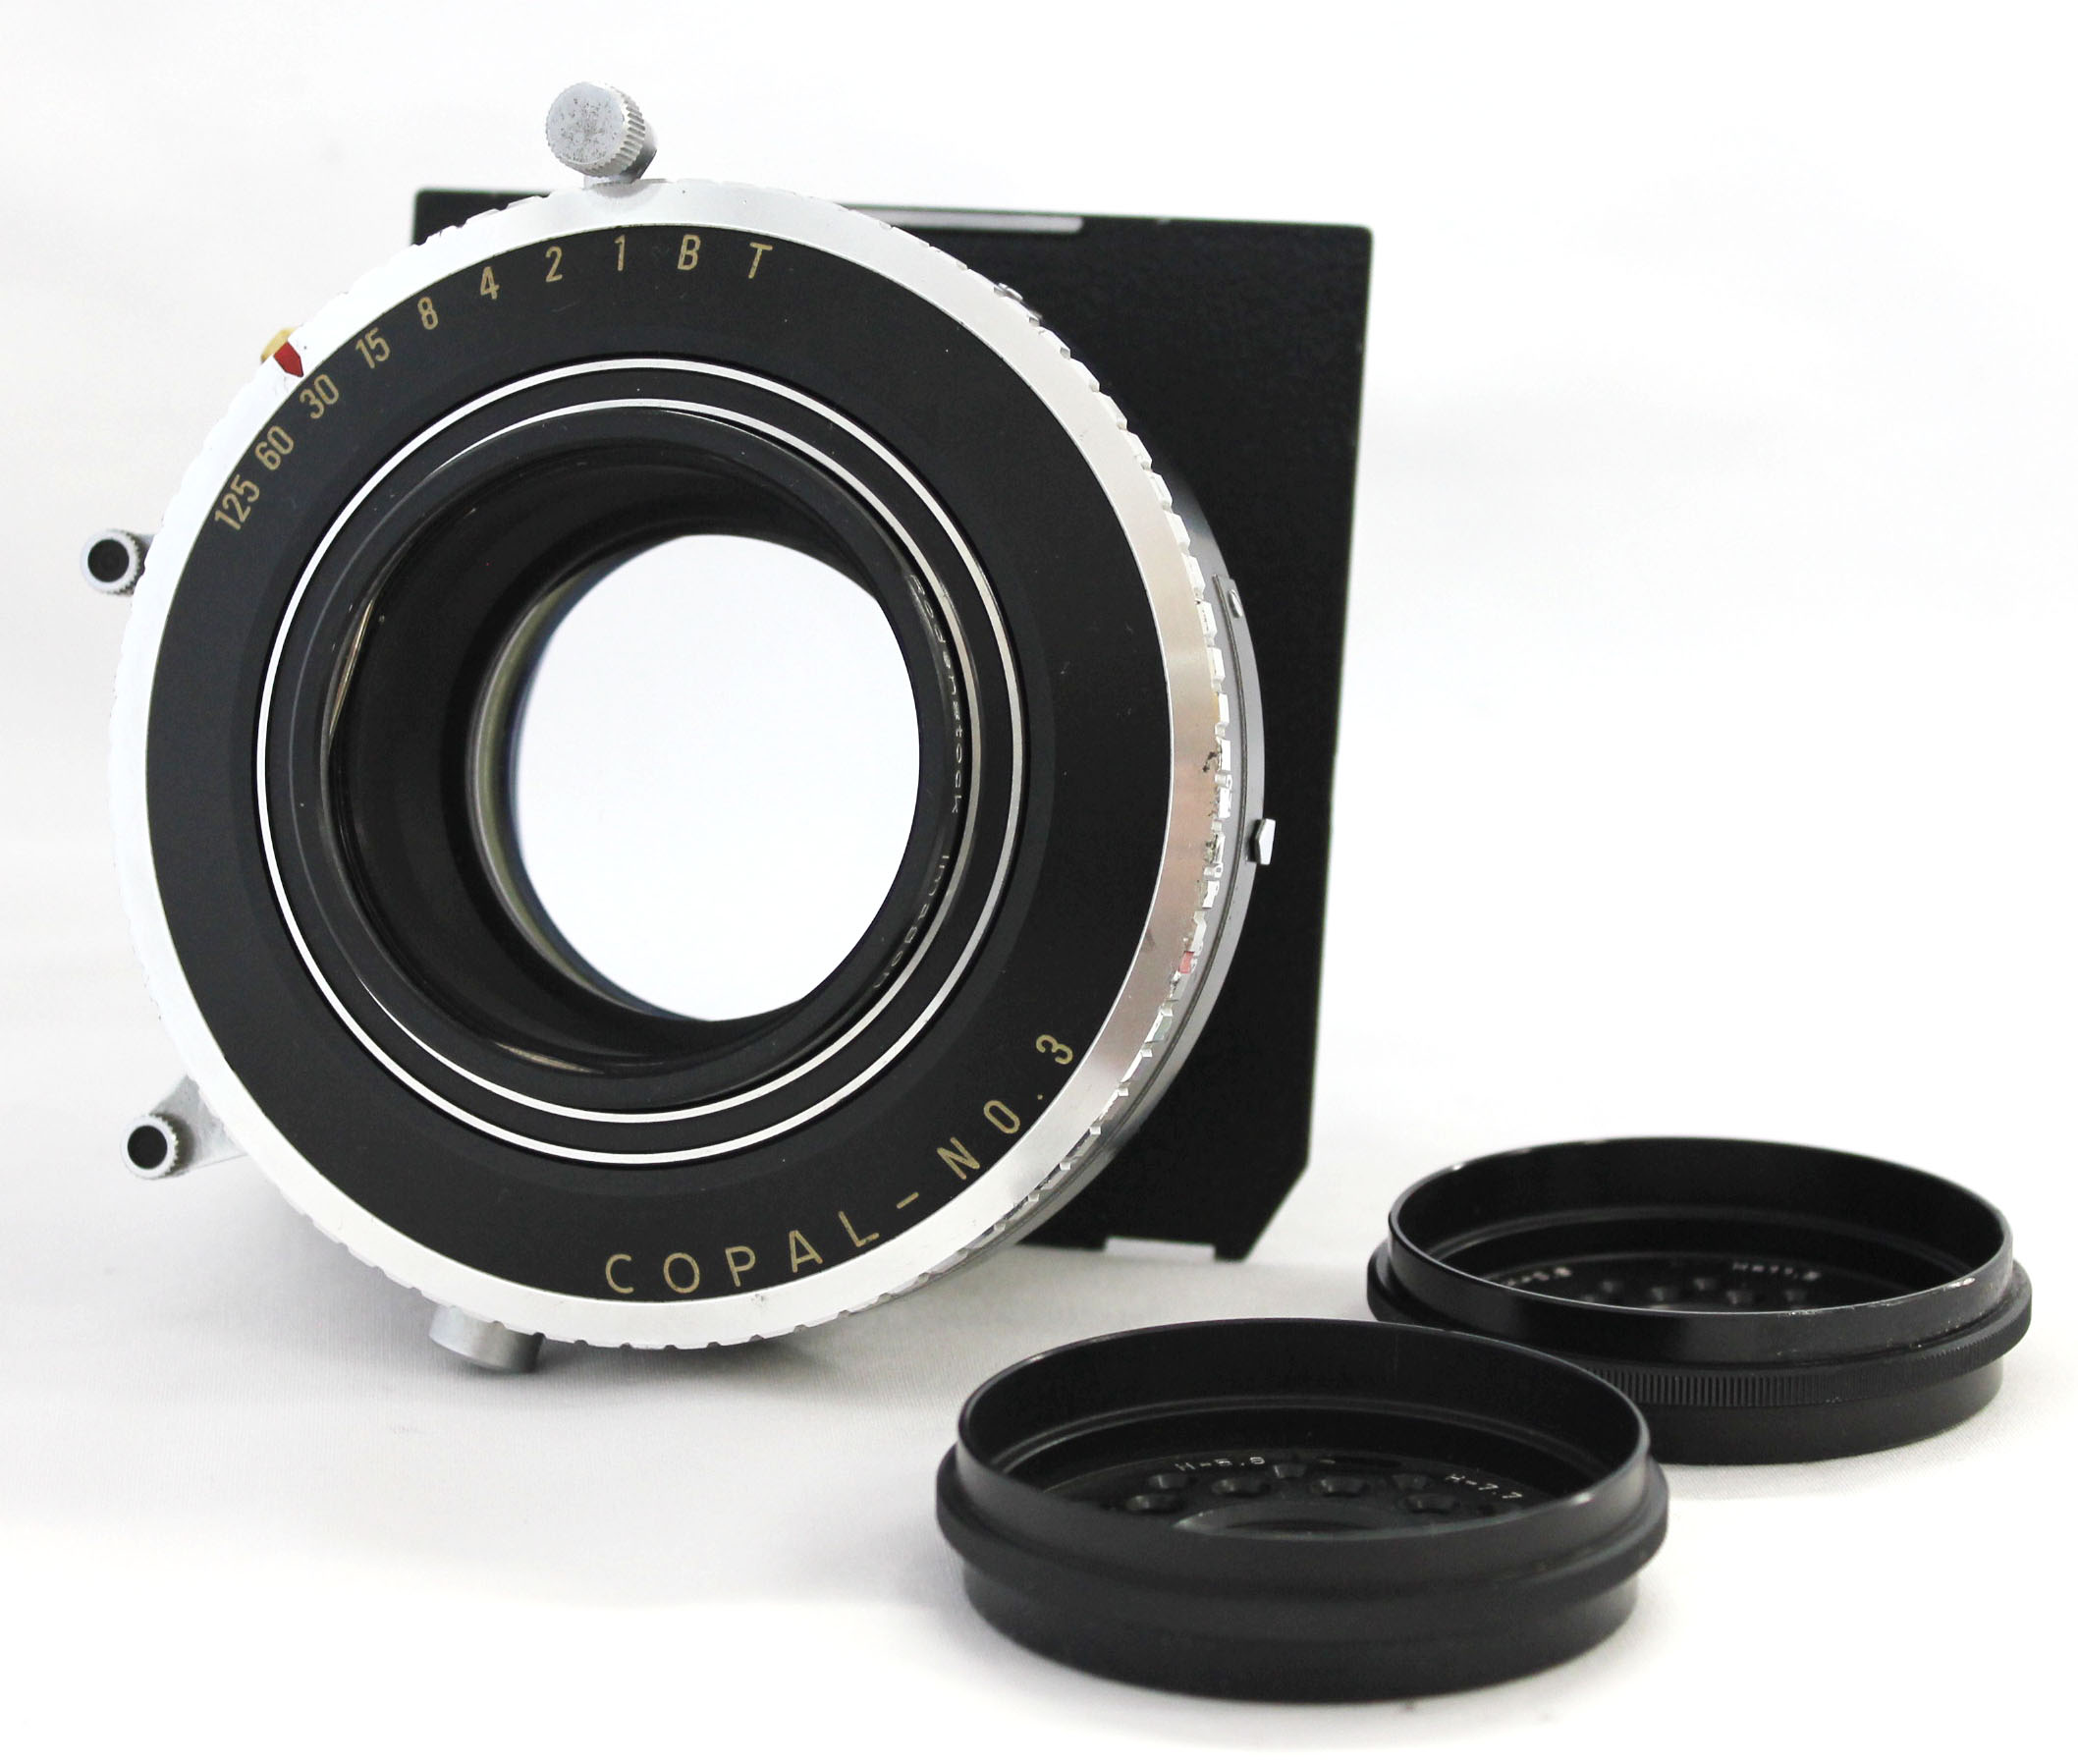 Rodenstock Imagon 200mm H=5.8 Soft Focus Lens Copal No.3 Shutter Toyo Linhof Board from Japan